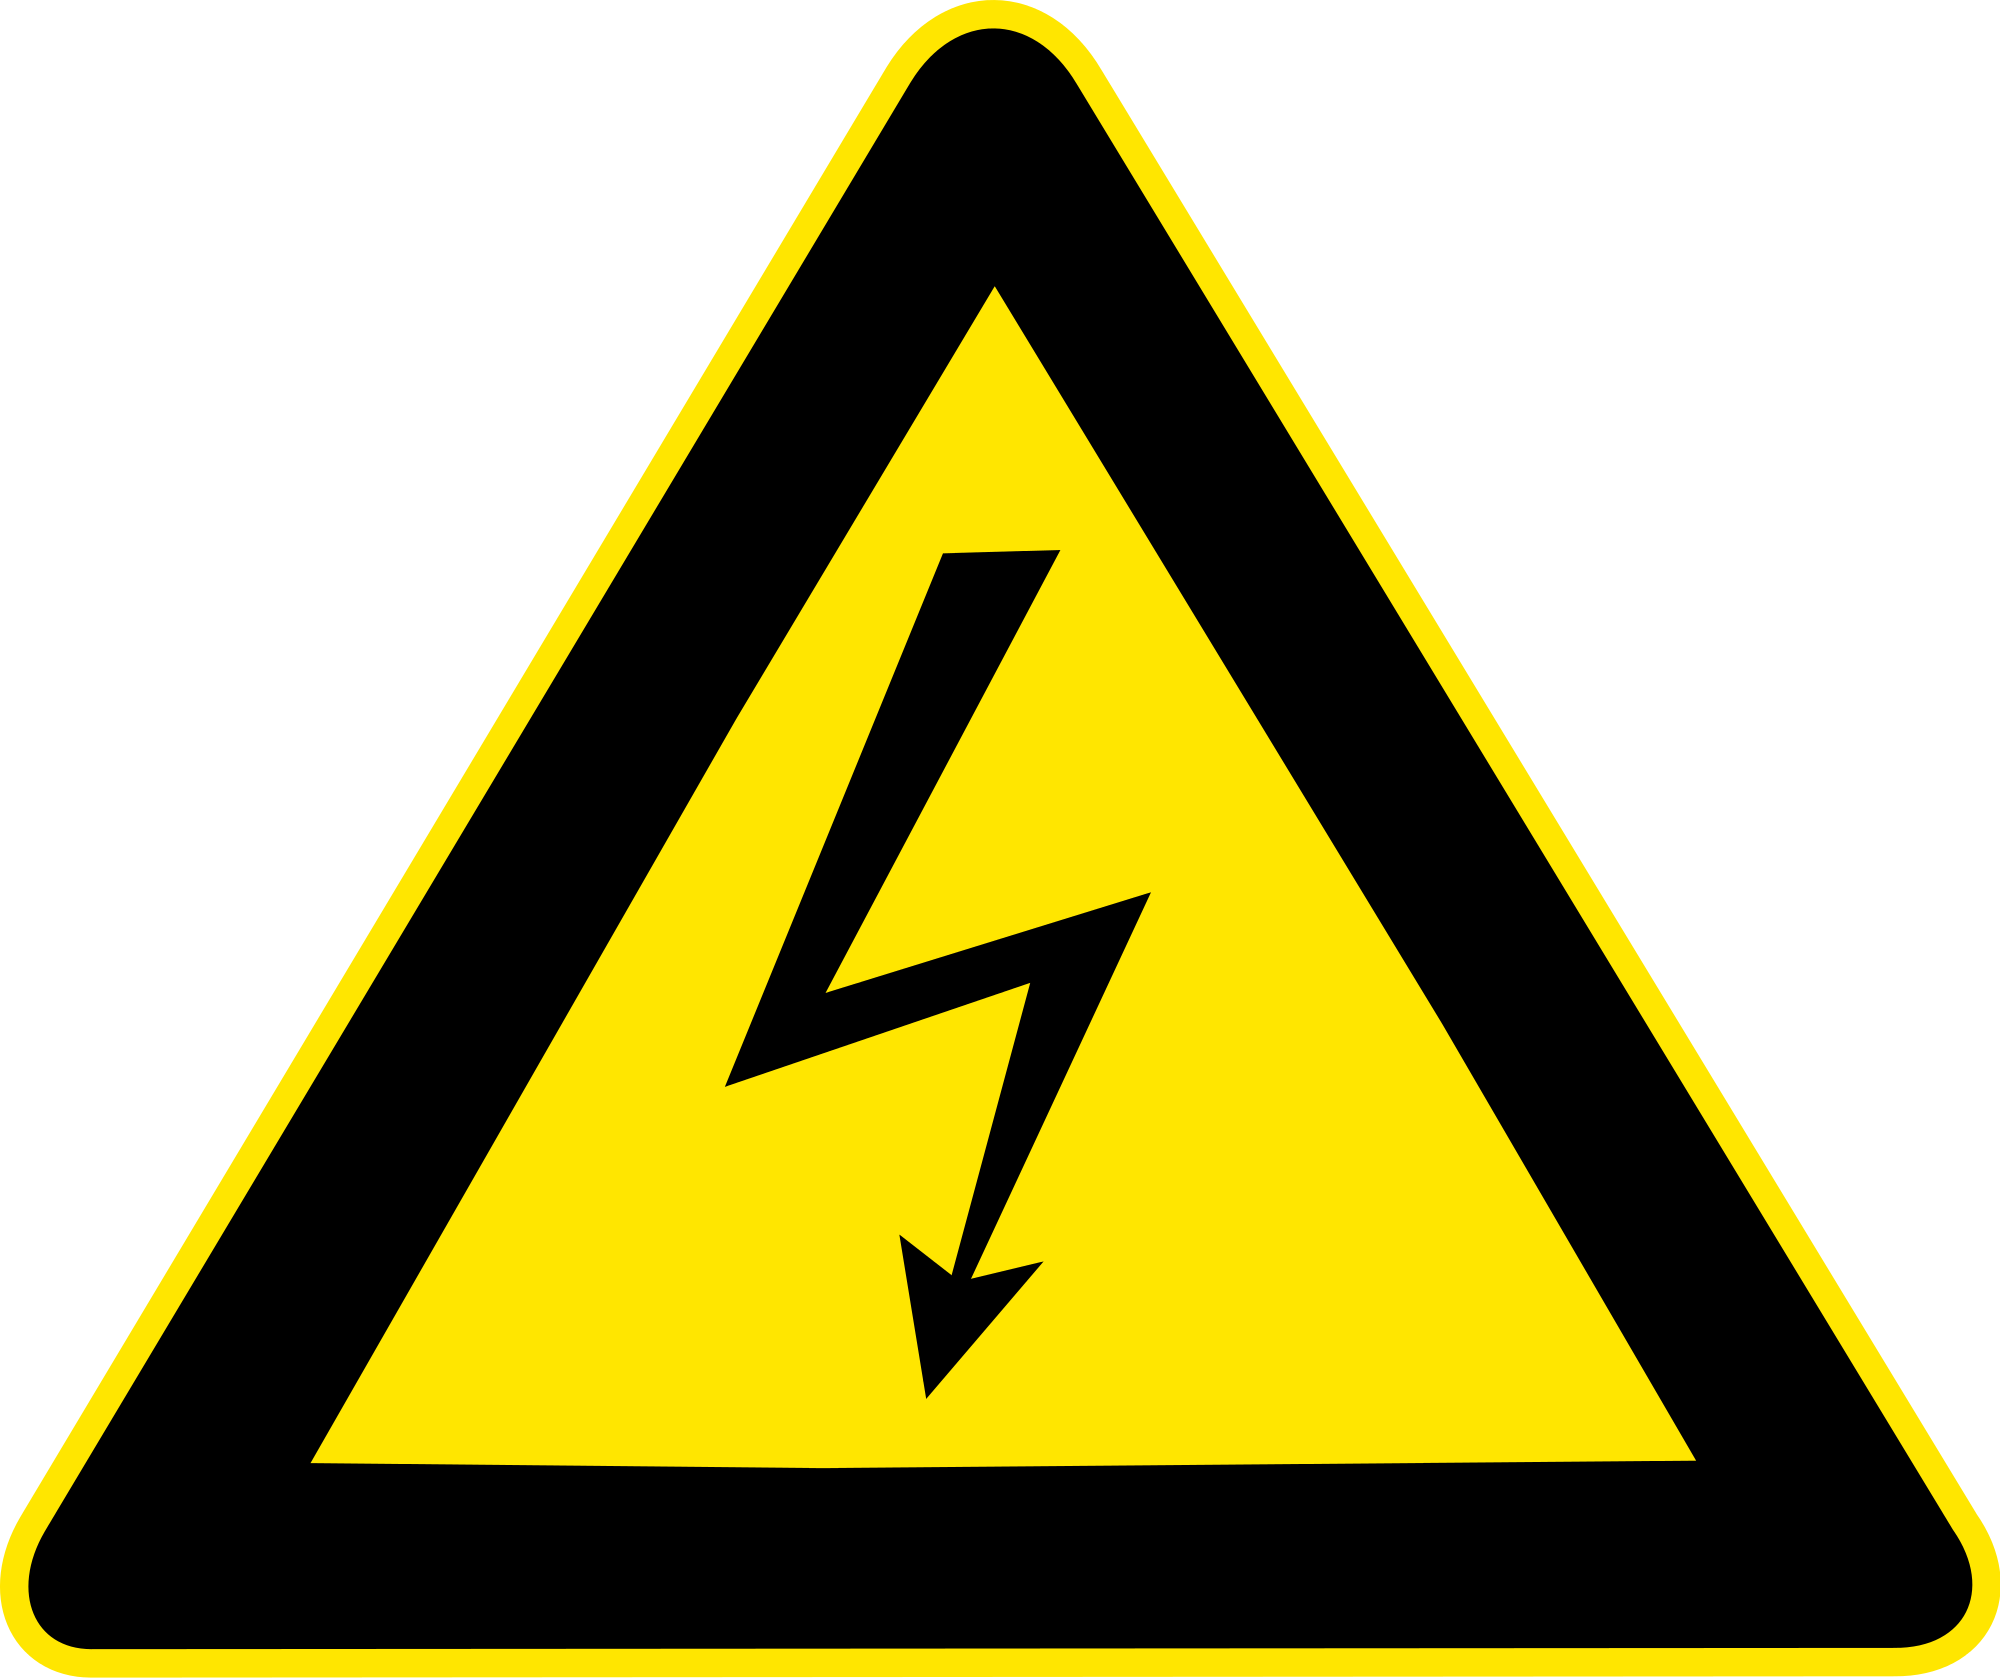 Caution High Voltage Sign - ClipArt Best